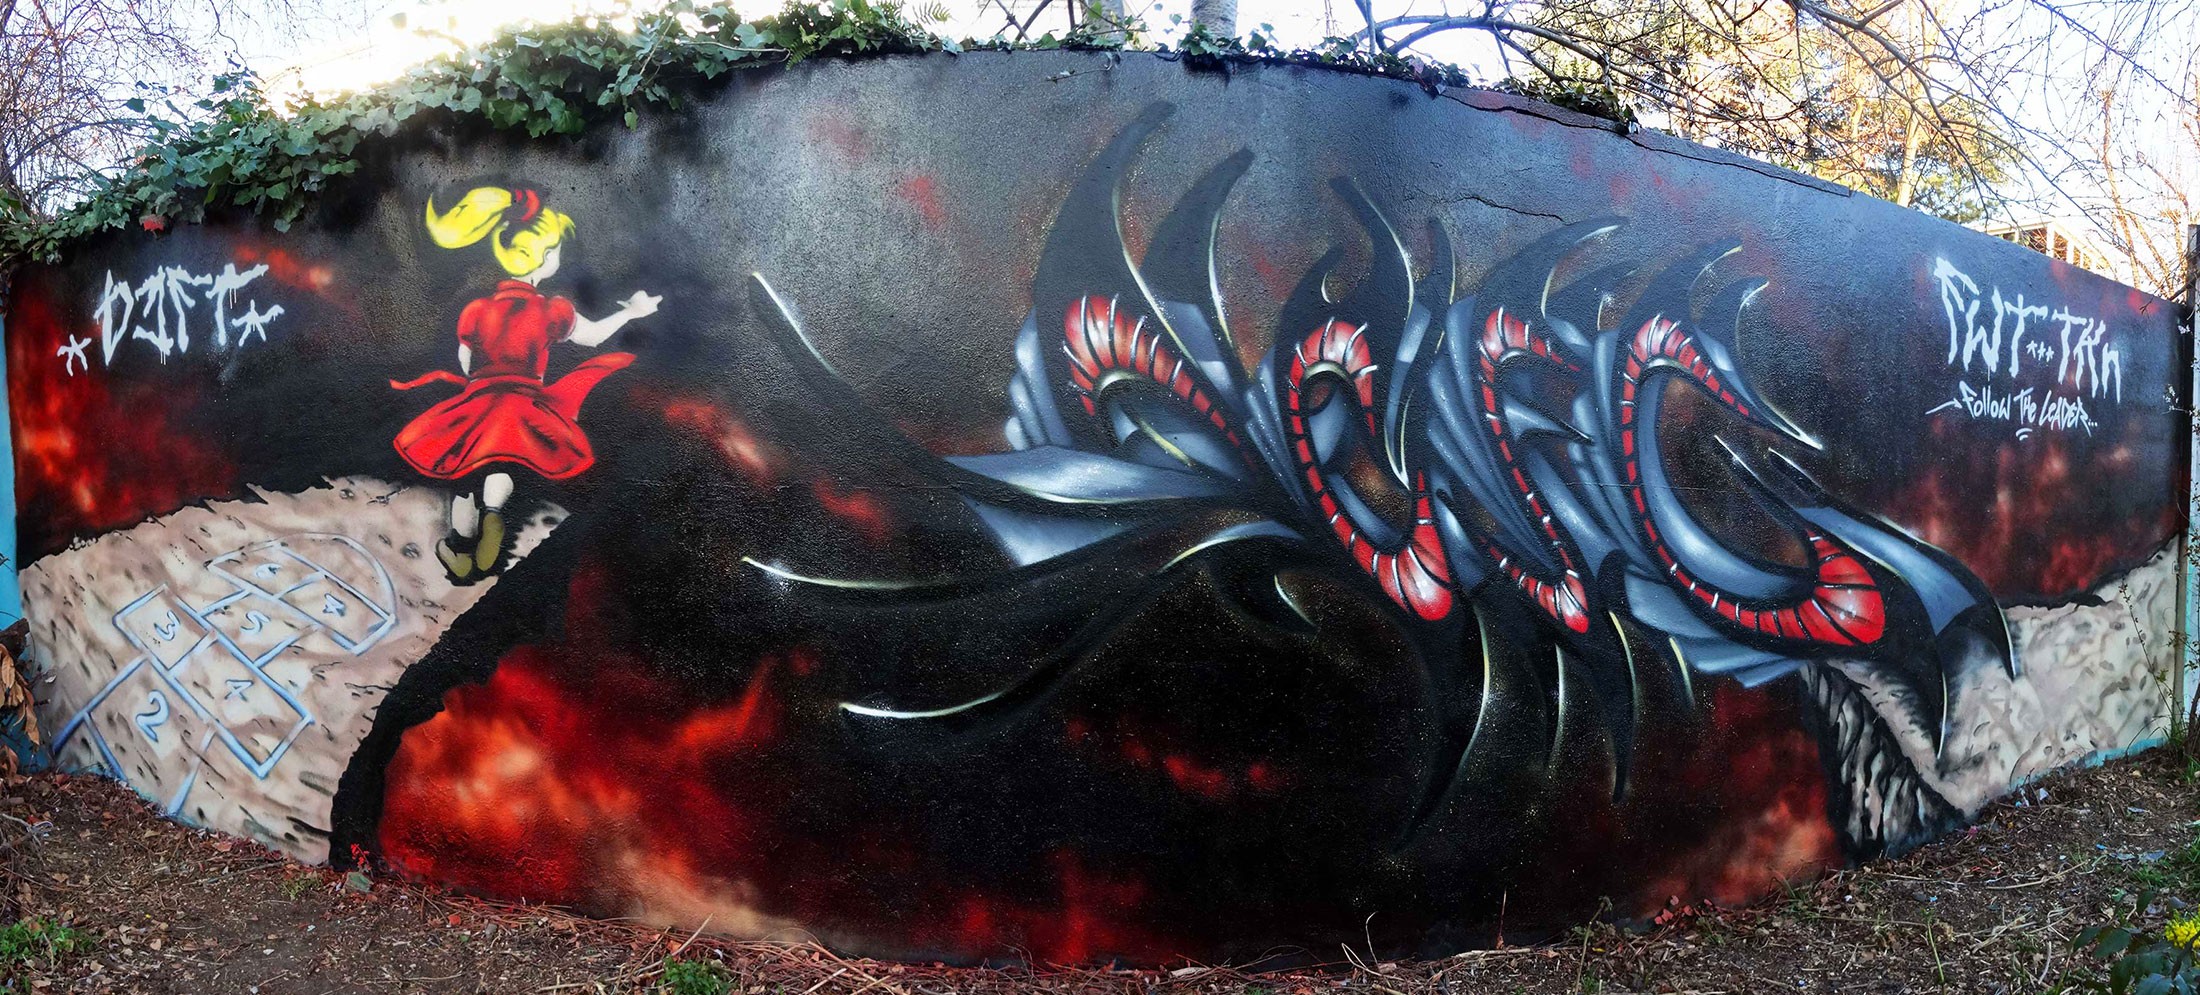 Korn Follow the leader Graffiti